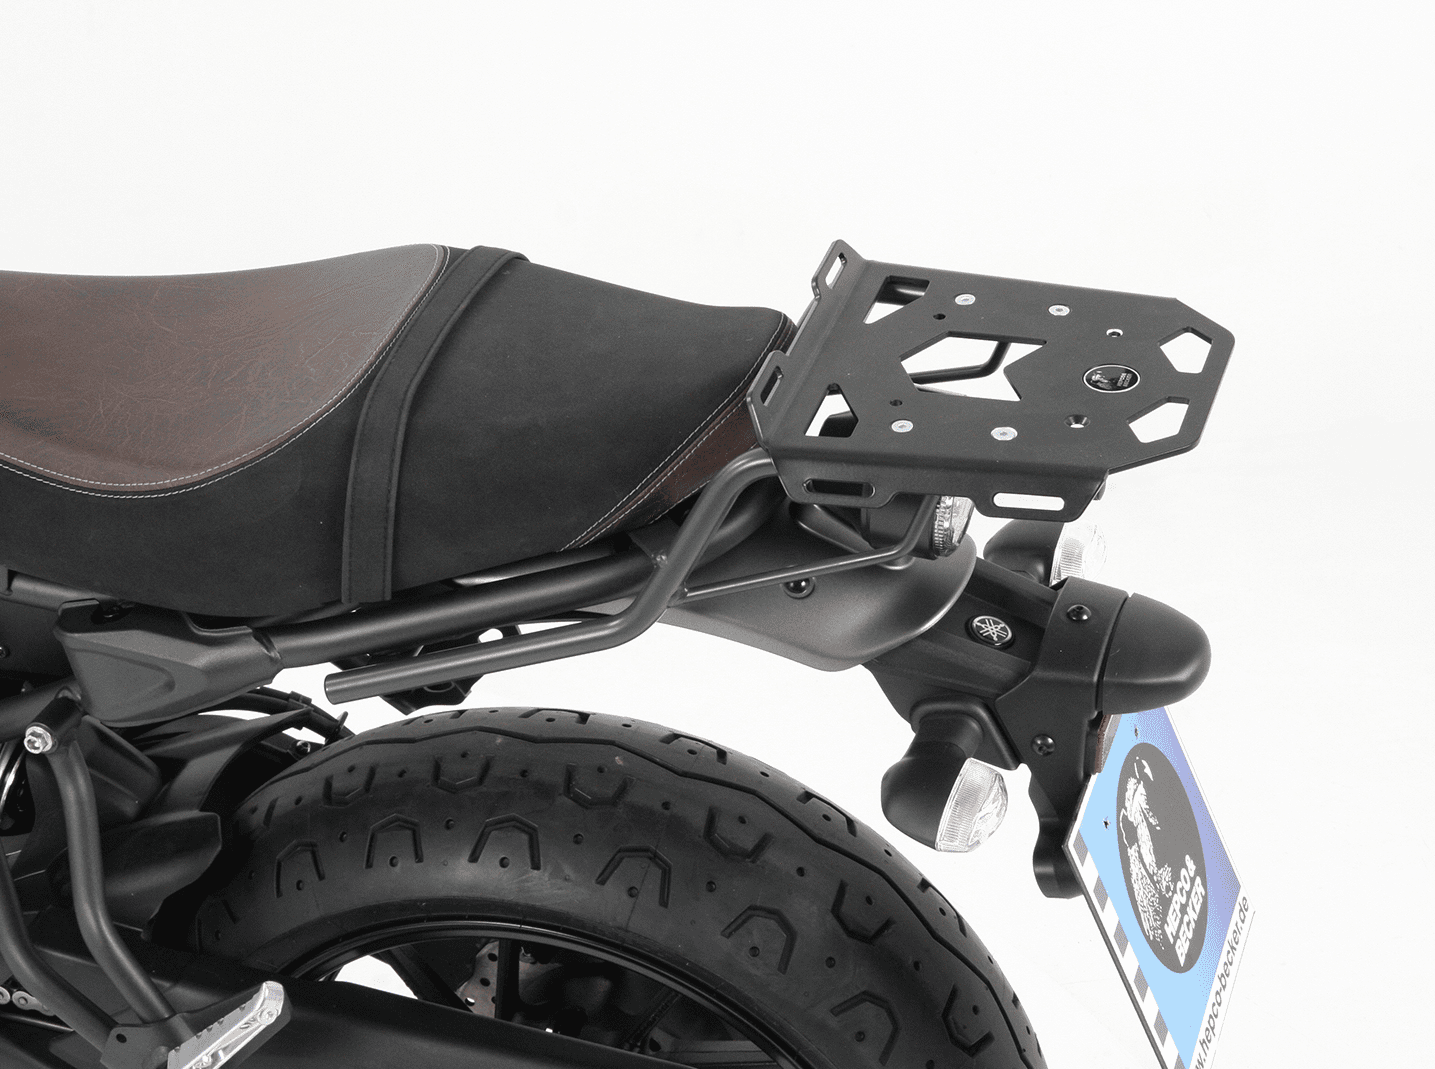 Minirack Softgepäck-Heckträger anthrazit für Yamaha XSR 700/Xtribute (2016-)